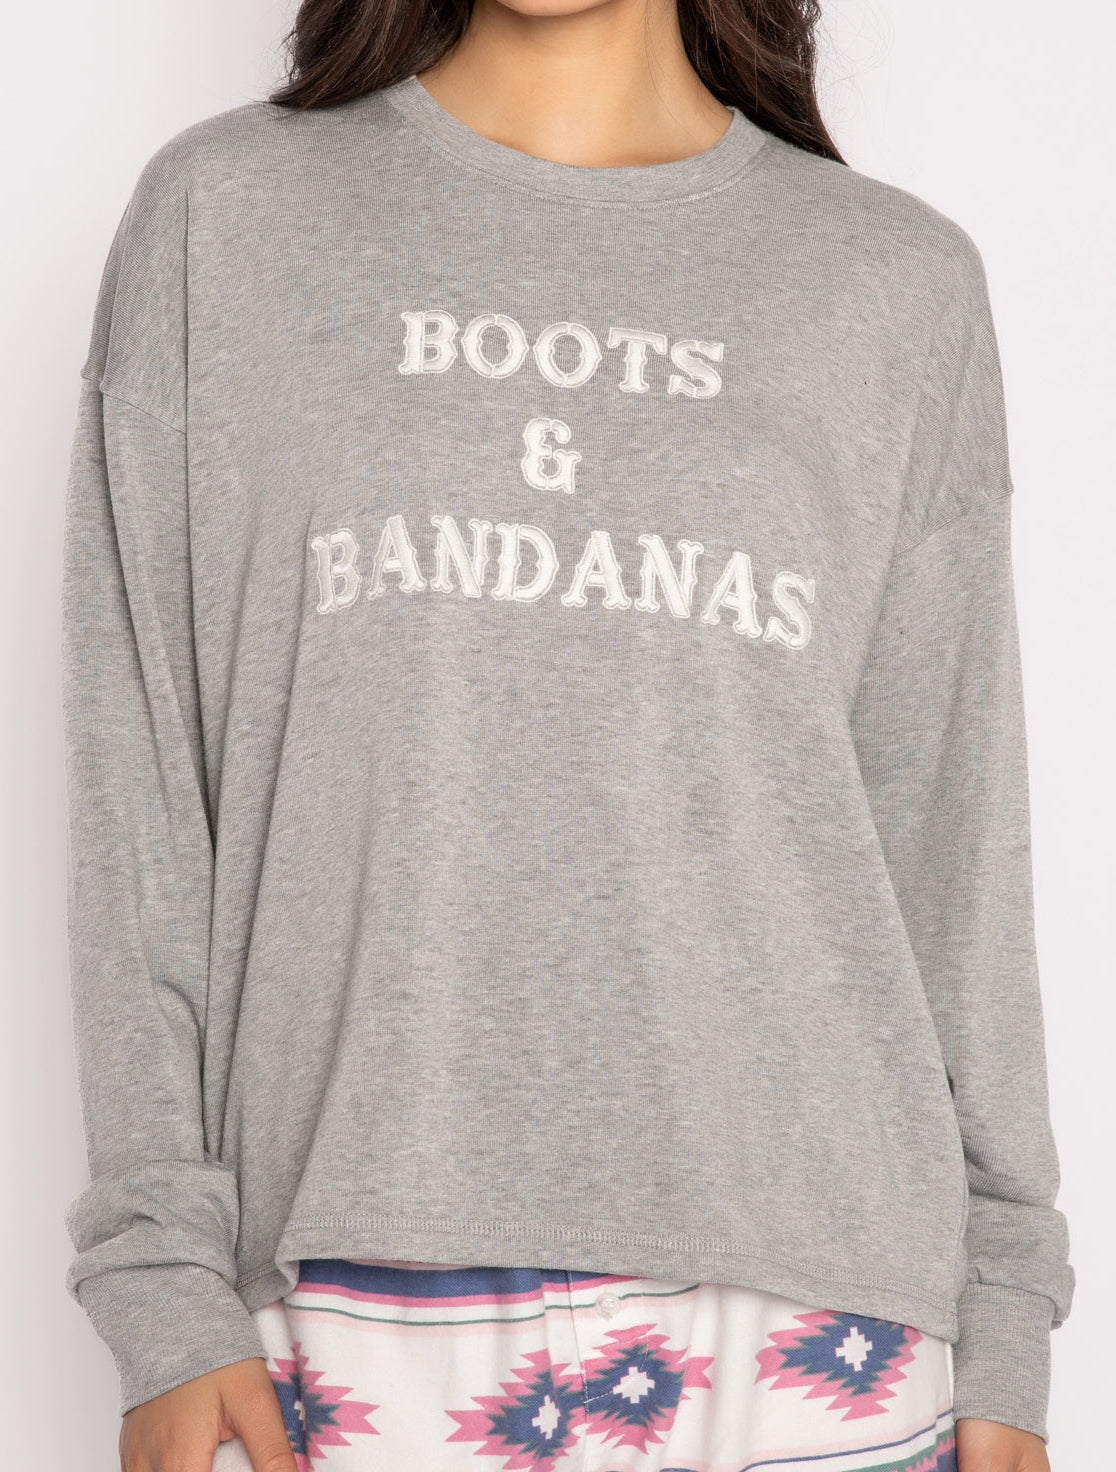 Boots and Bandanas Long Sleeve Top